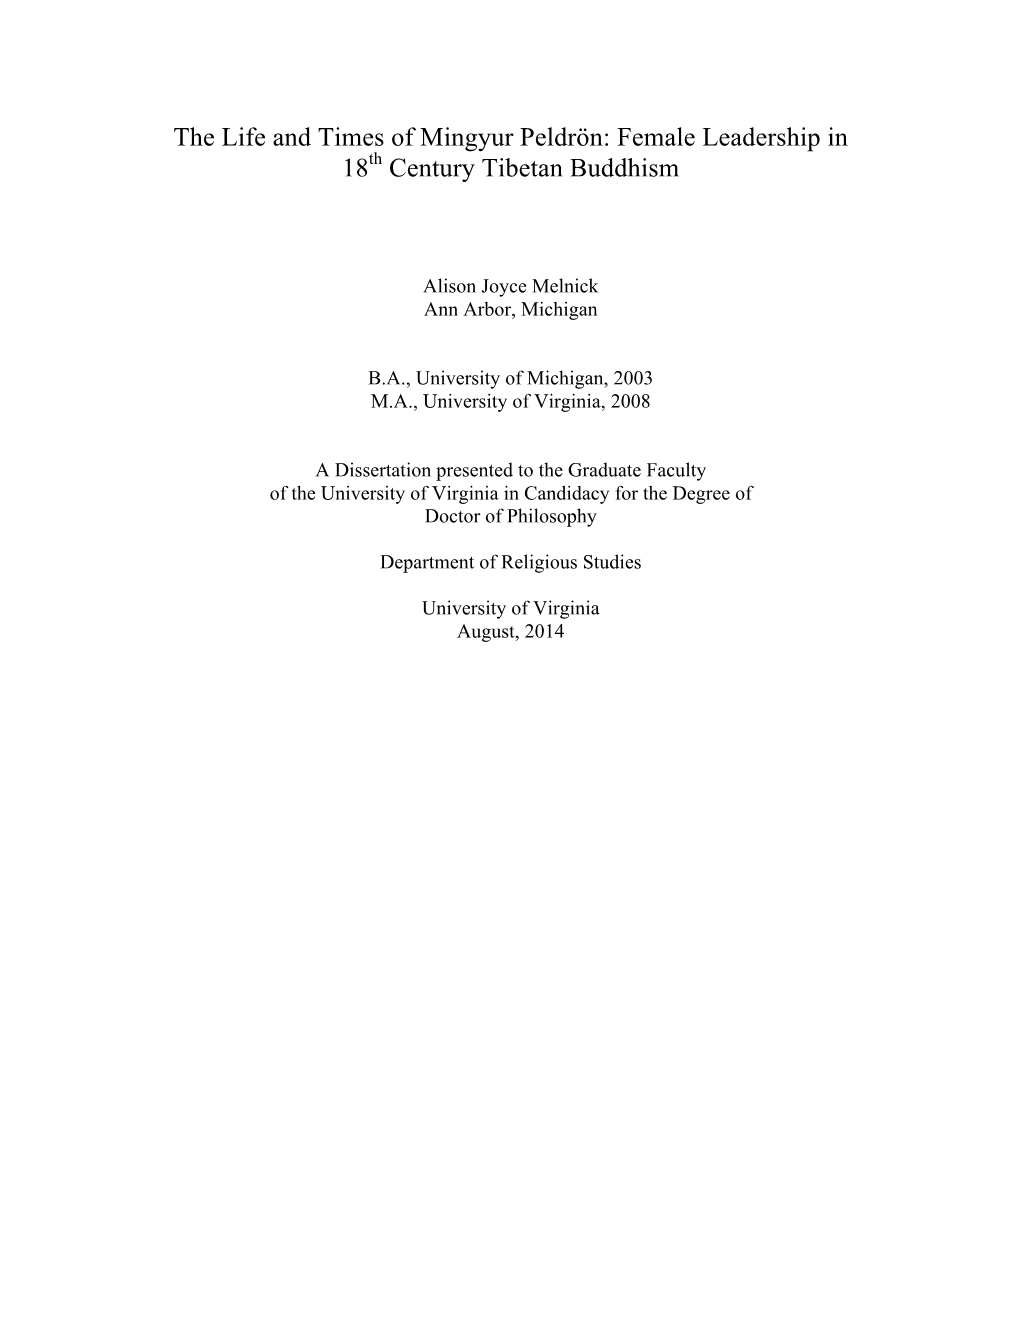 The Life and Times of Mingyur Peldrön: Female Leadership in 18Th Century Tibetan Buddhism